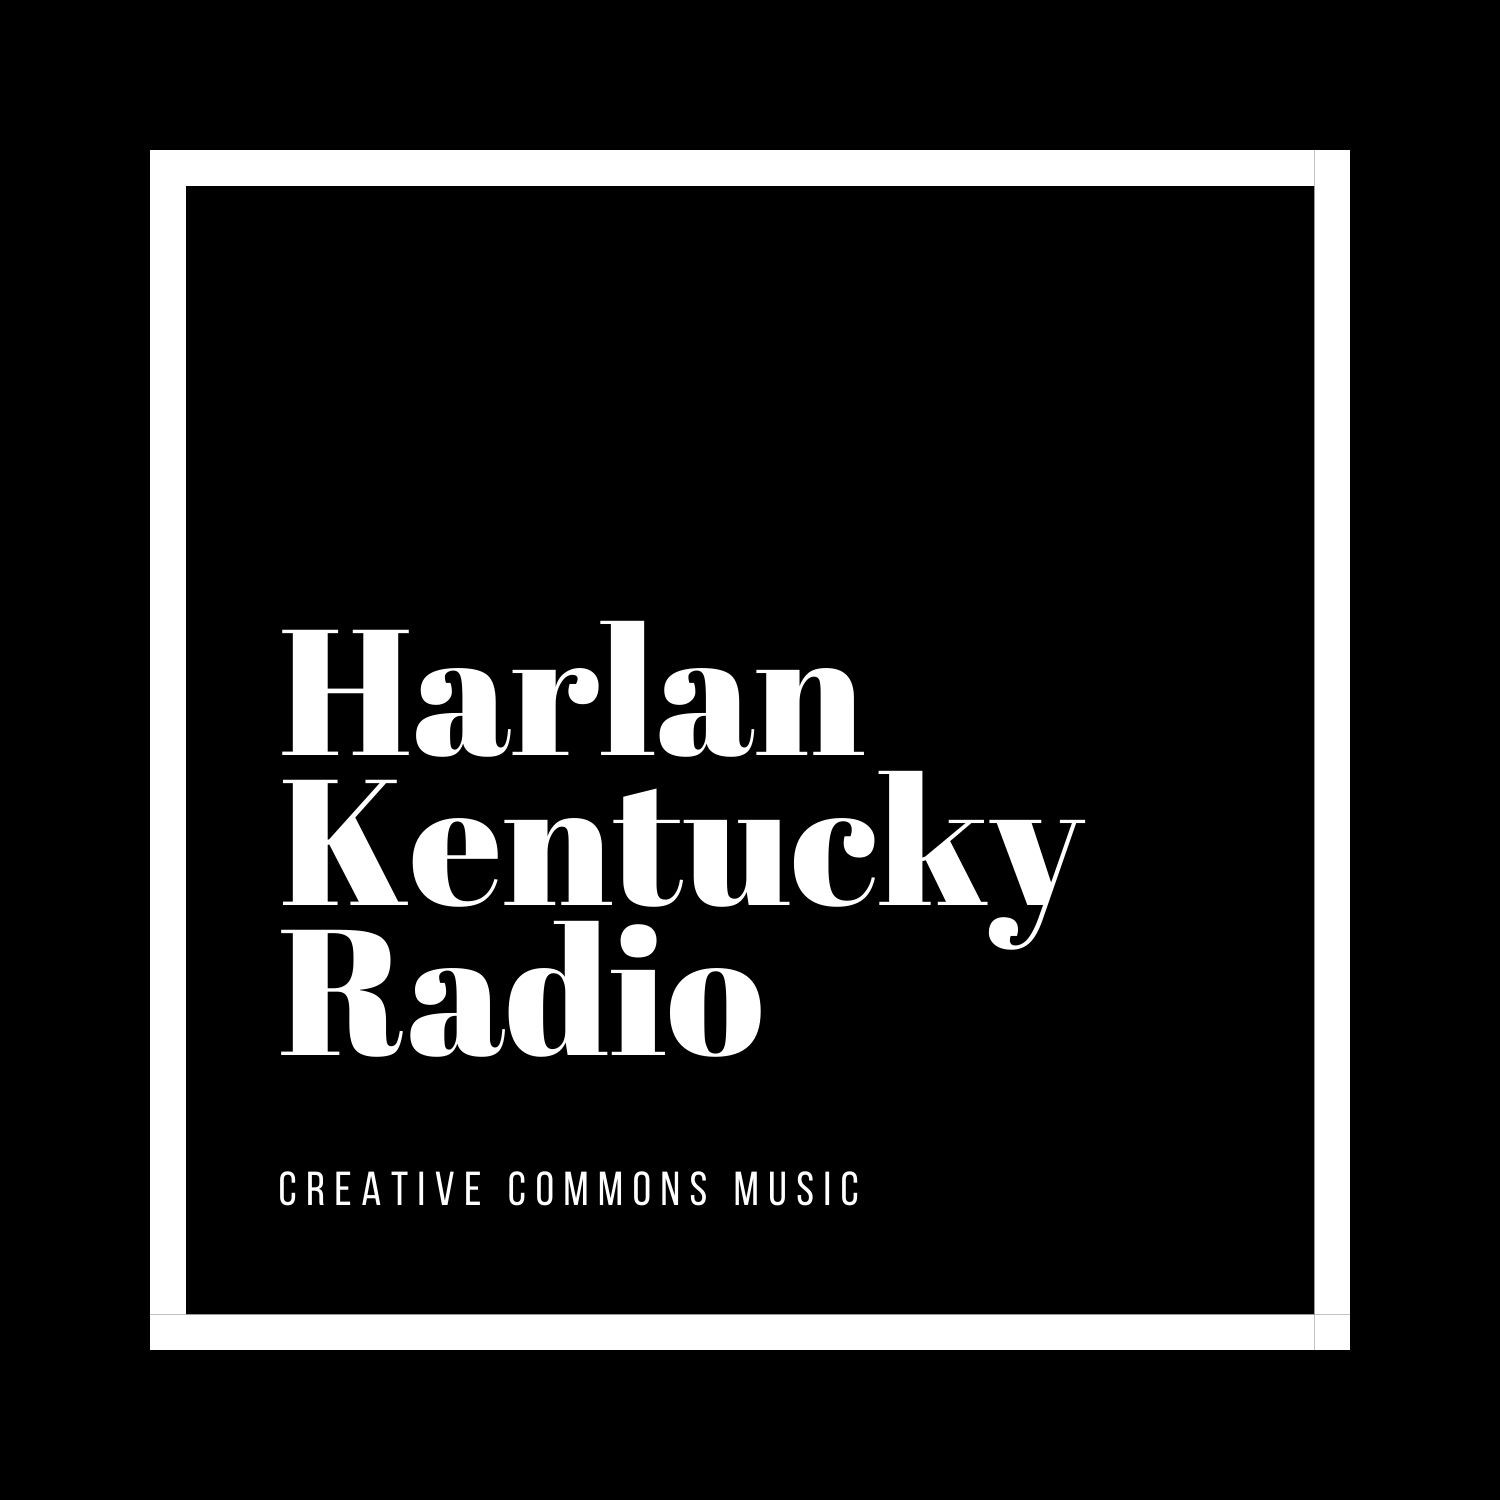 Harlan Kentucky Creative Commons Radio